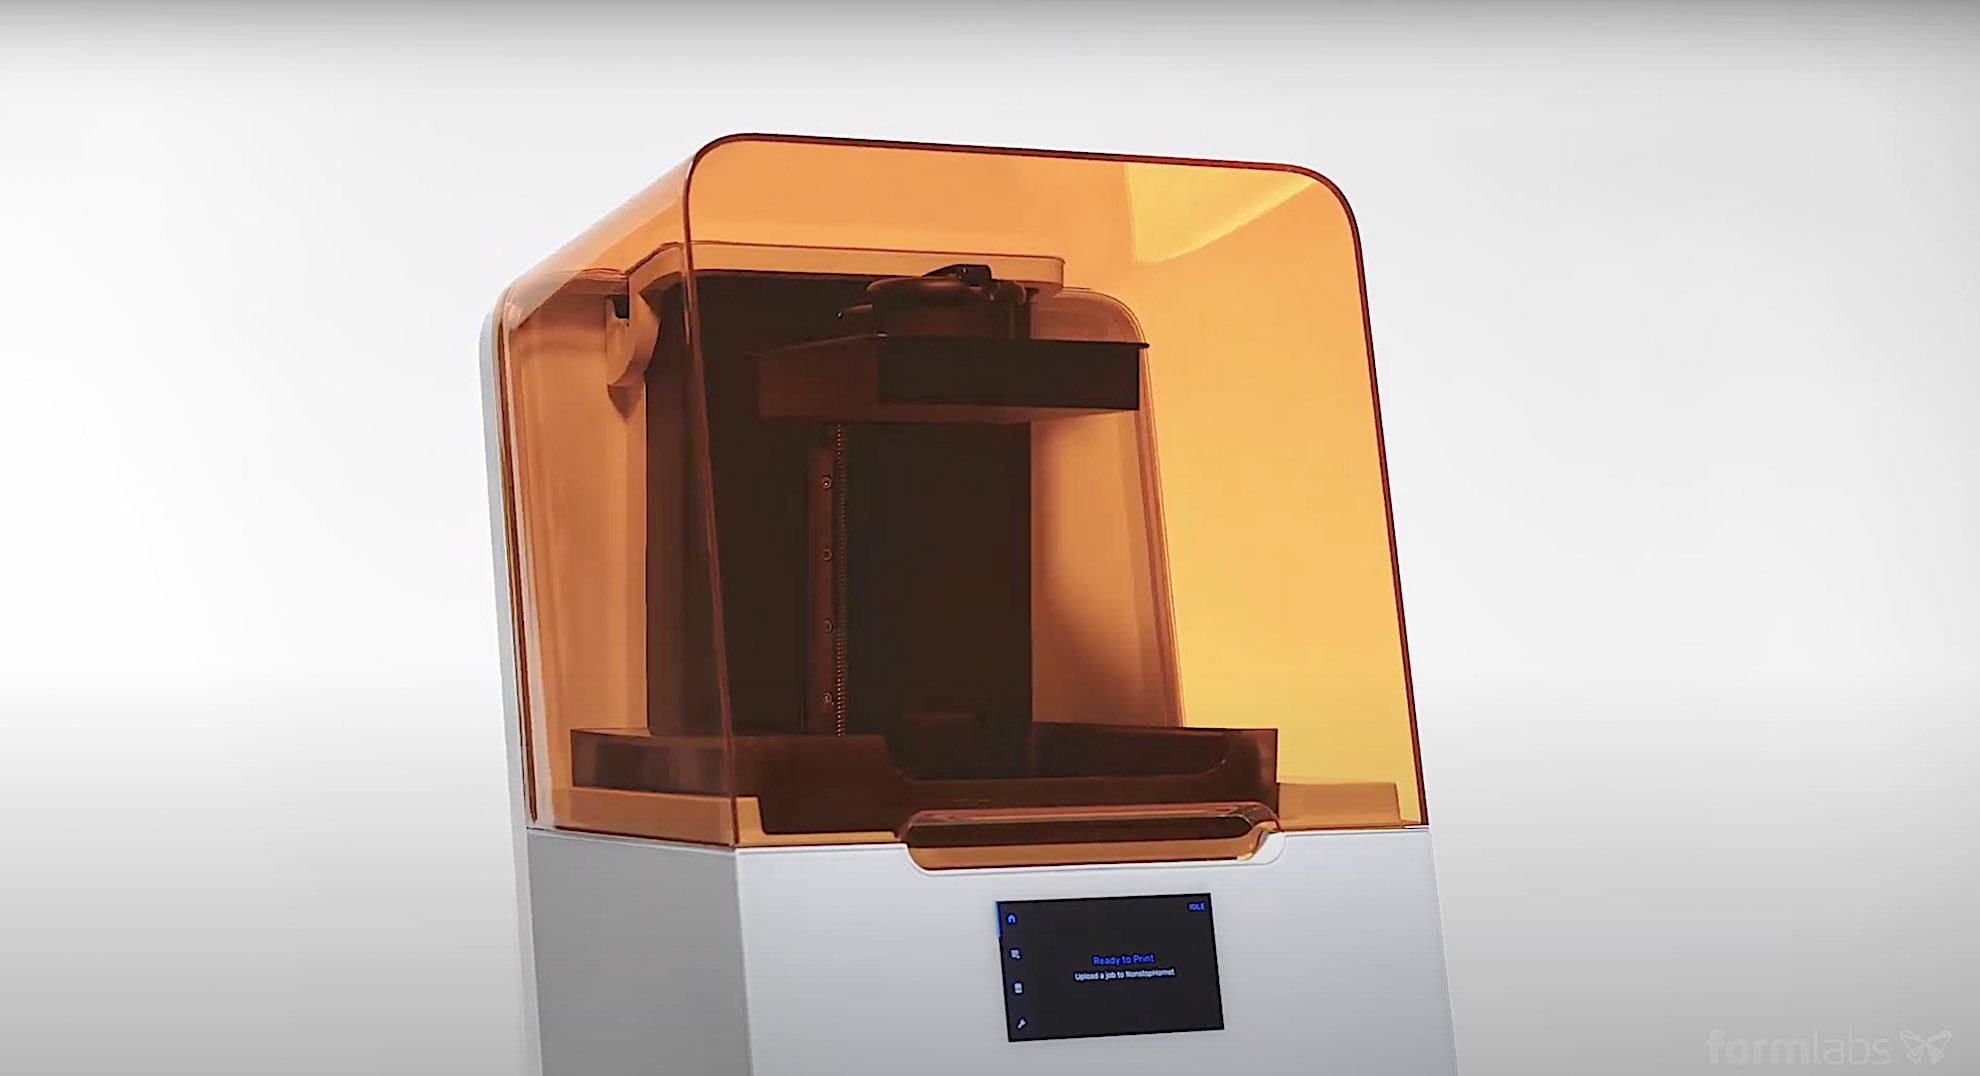 Vega Digital Awards Winner - 3D Printing For Good: Formlabs Response to COVID-19, Formlabs